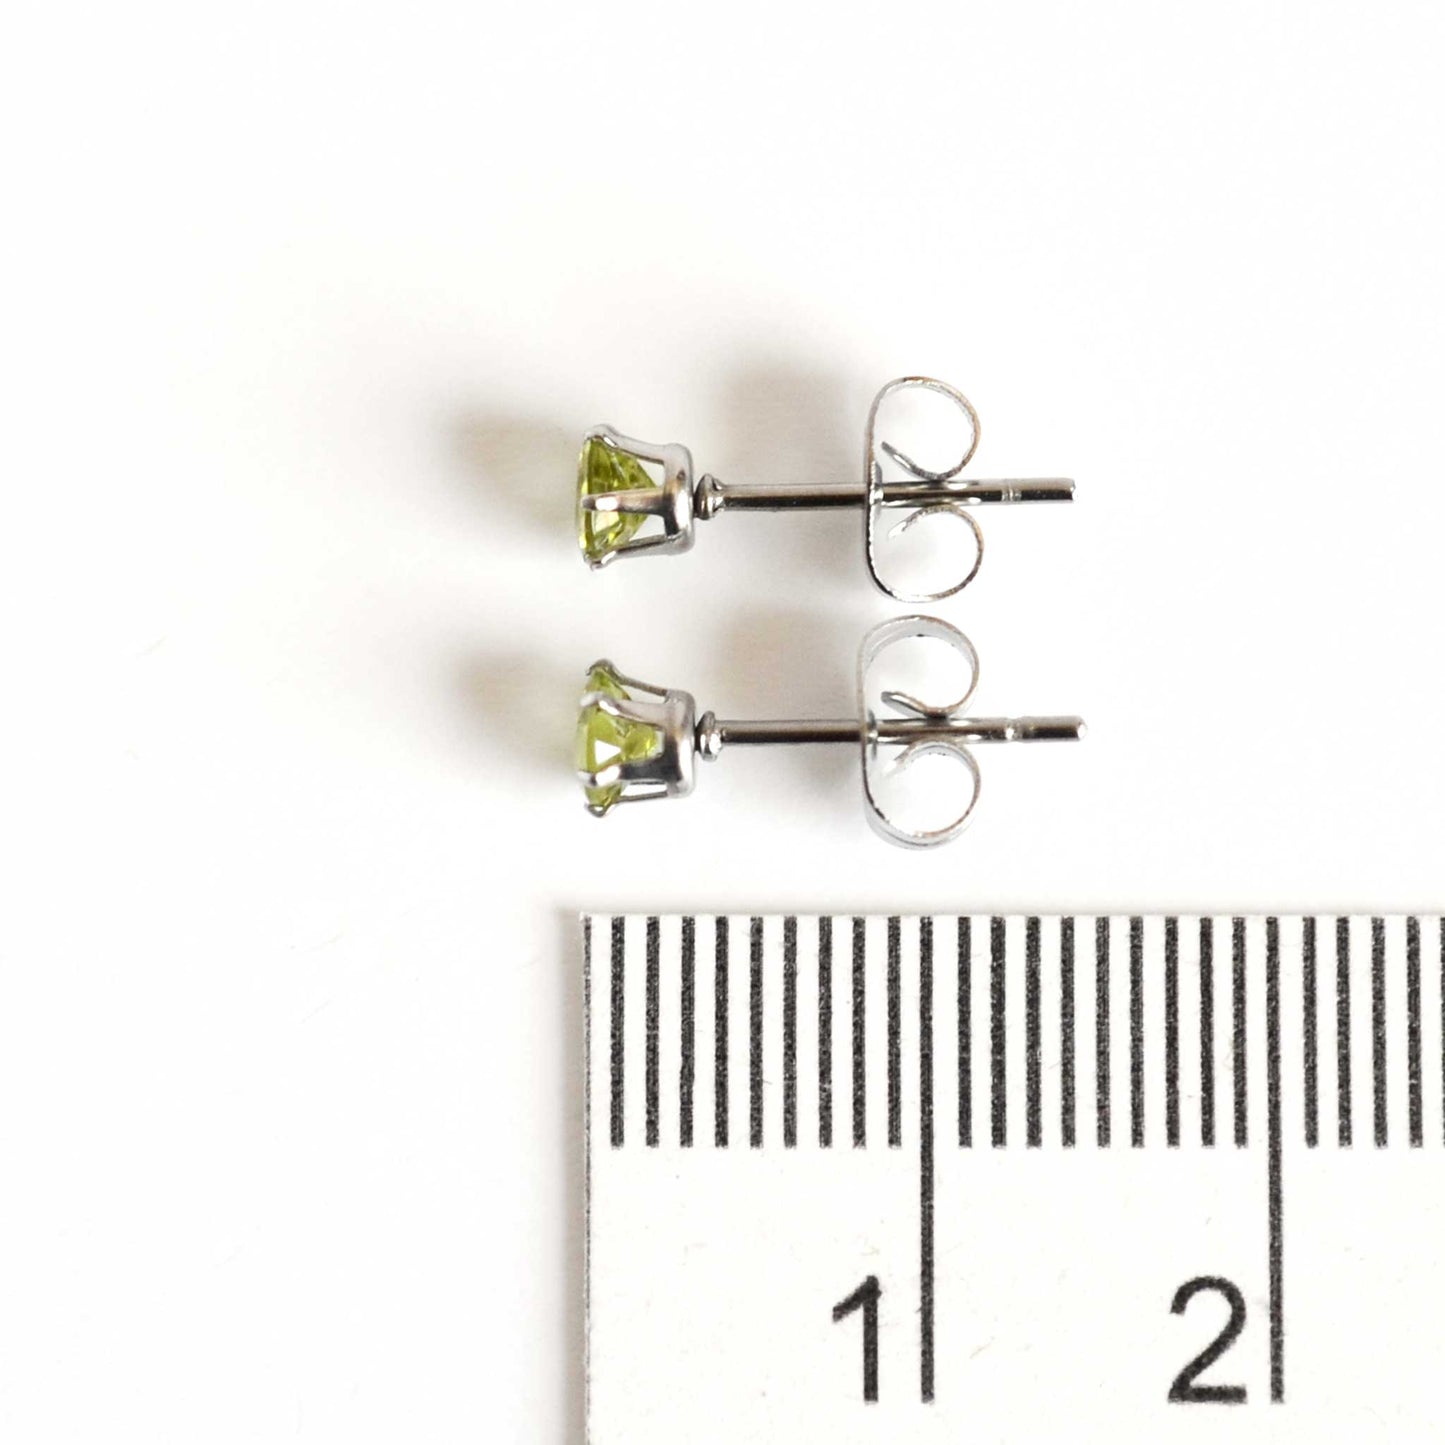 4mm Peridot gemstone stud earrings next to ruler